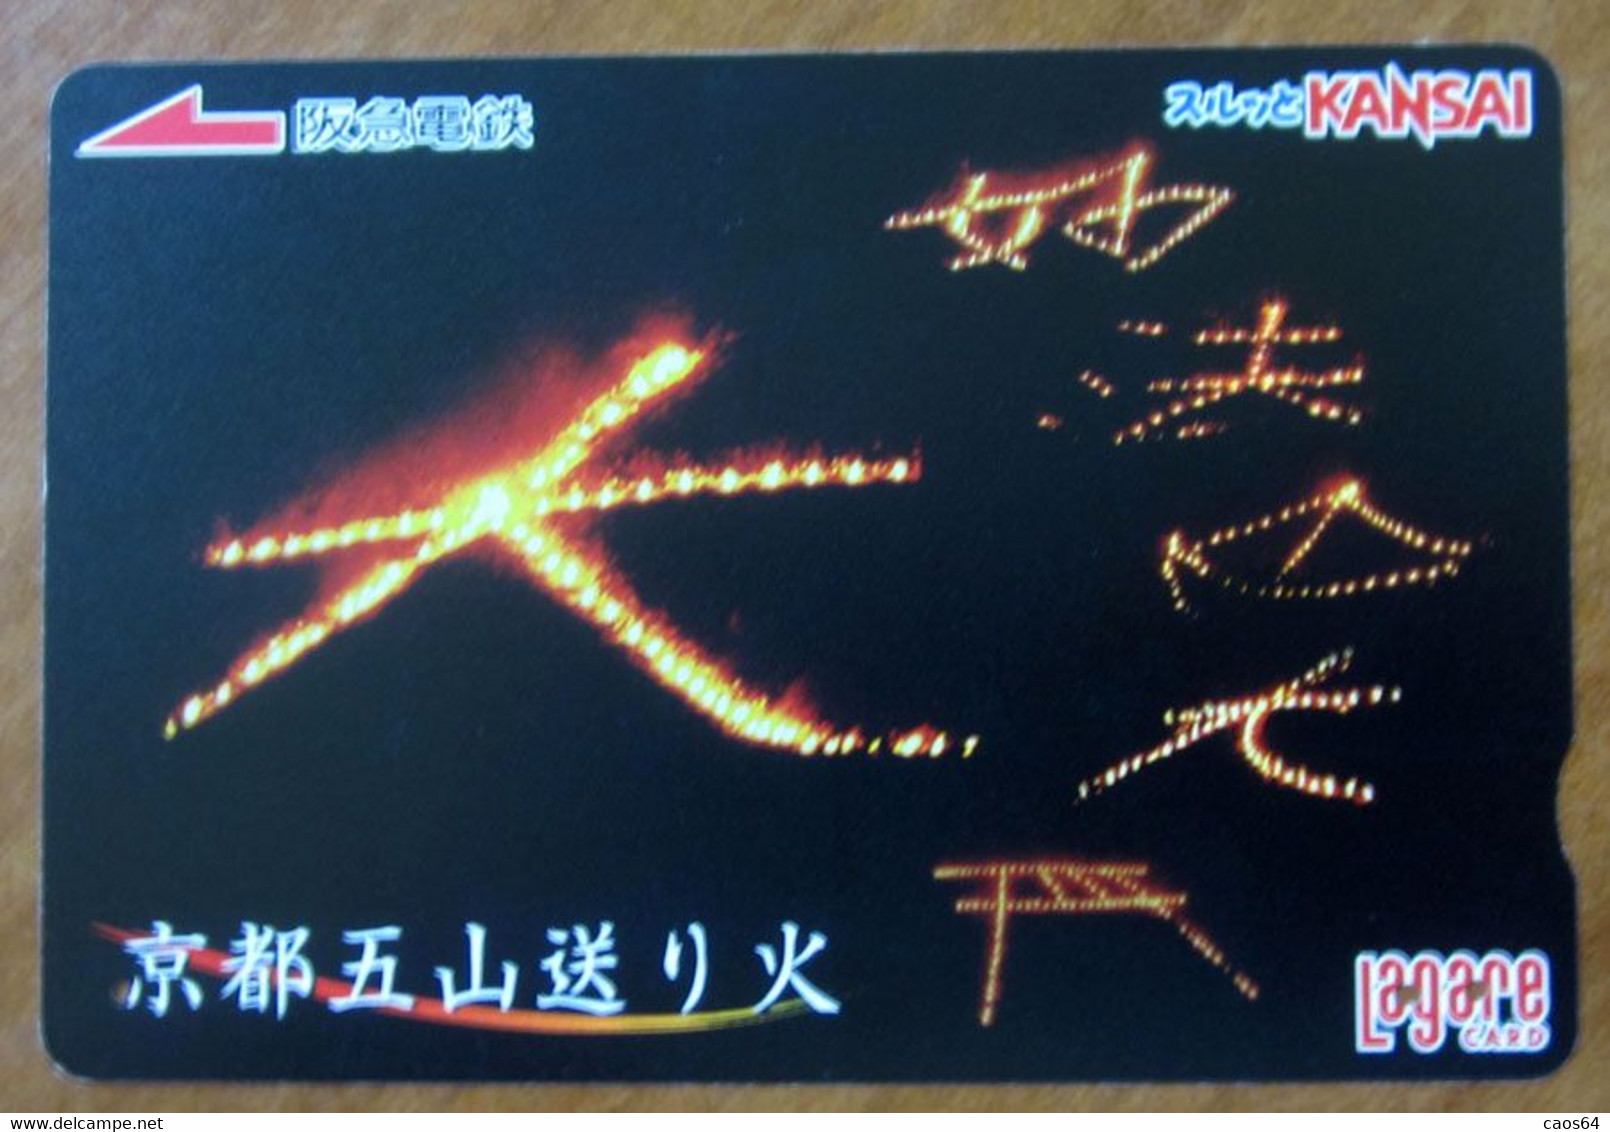 GIAPPONE Ticket Biglietto Alfabeto Lettere - Kansai Railway  Card 1.000 ¥ - Usato - Monde